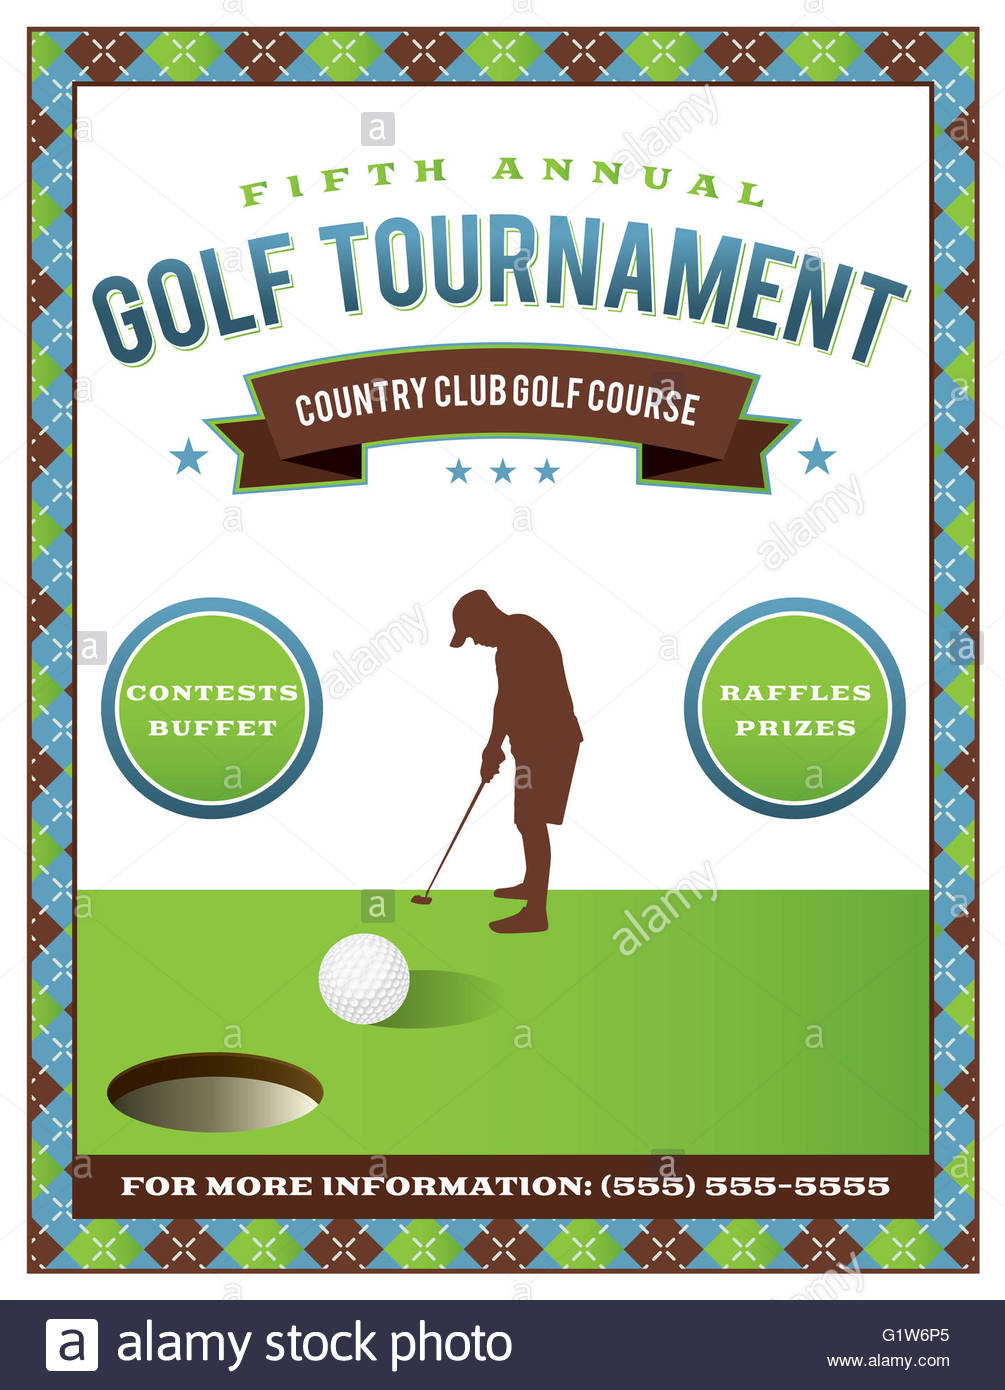 Template Golf Tournament Scramble Invitation Stockfotos und  With Regard To Golf Tournament Template Flyer Inside Golf Tournament Template Flyer